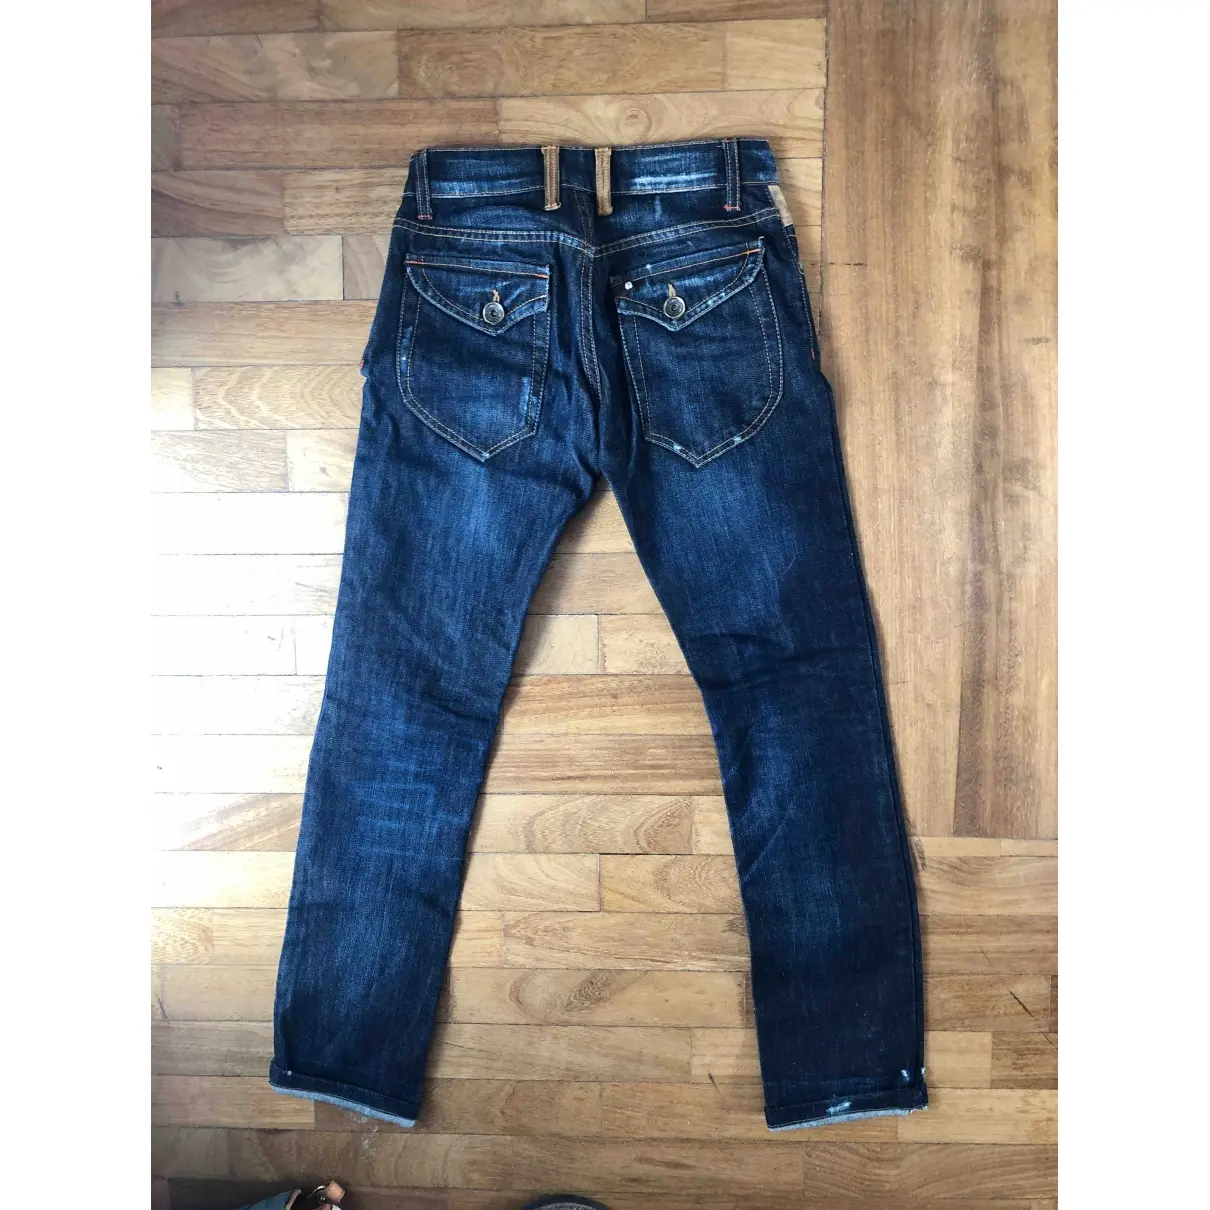 Buy Liu.Jo Slim jeans online